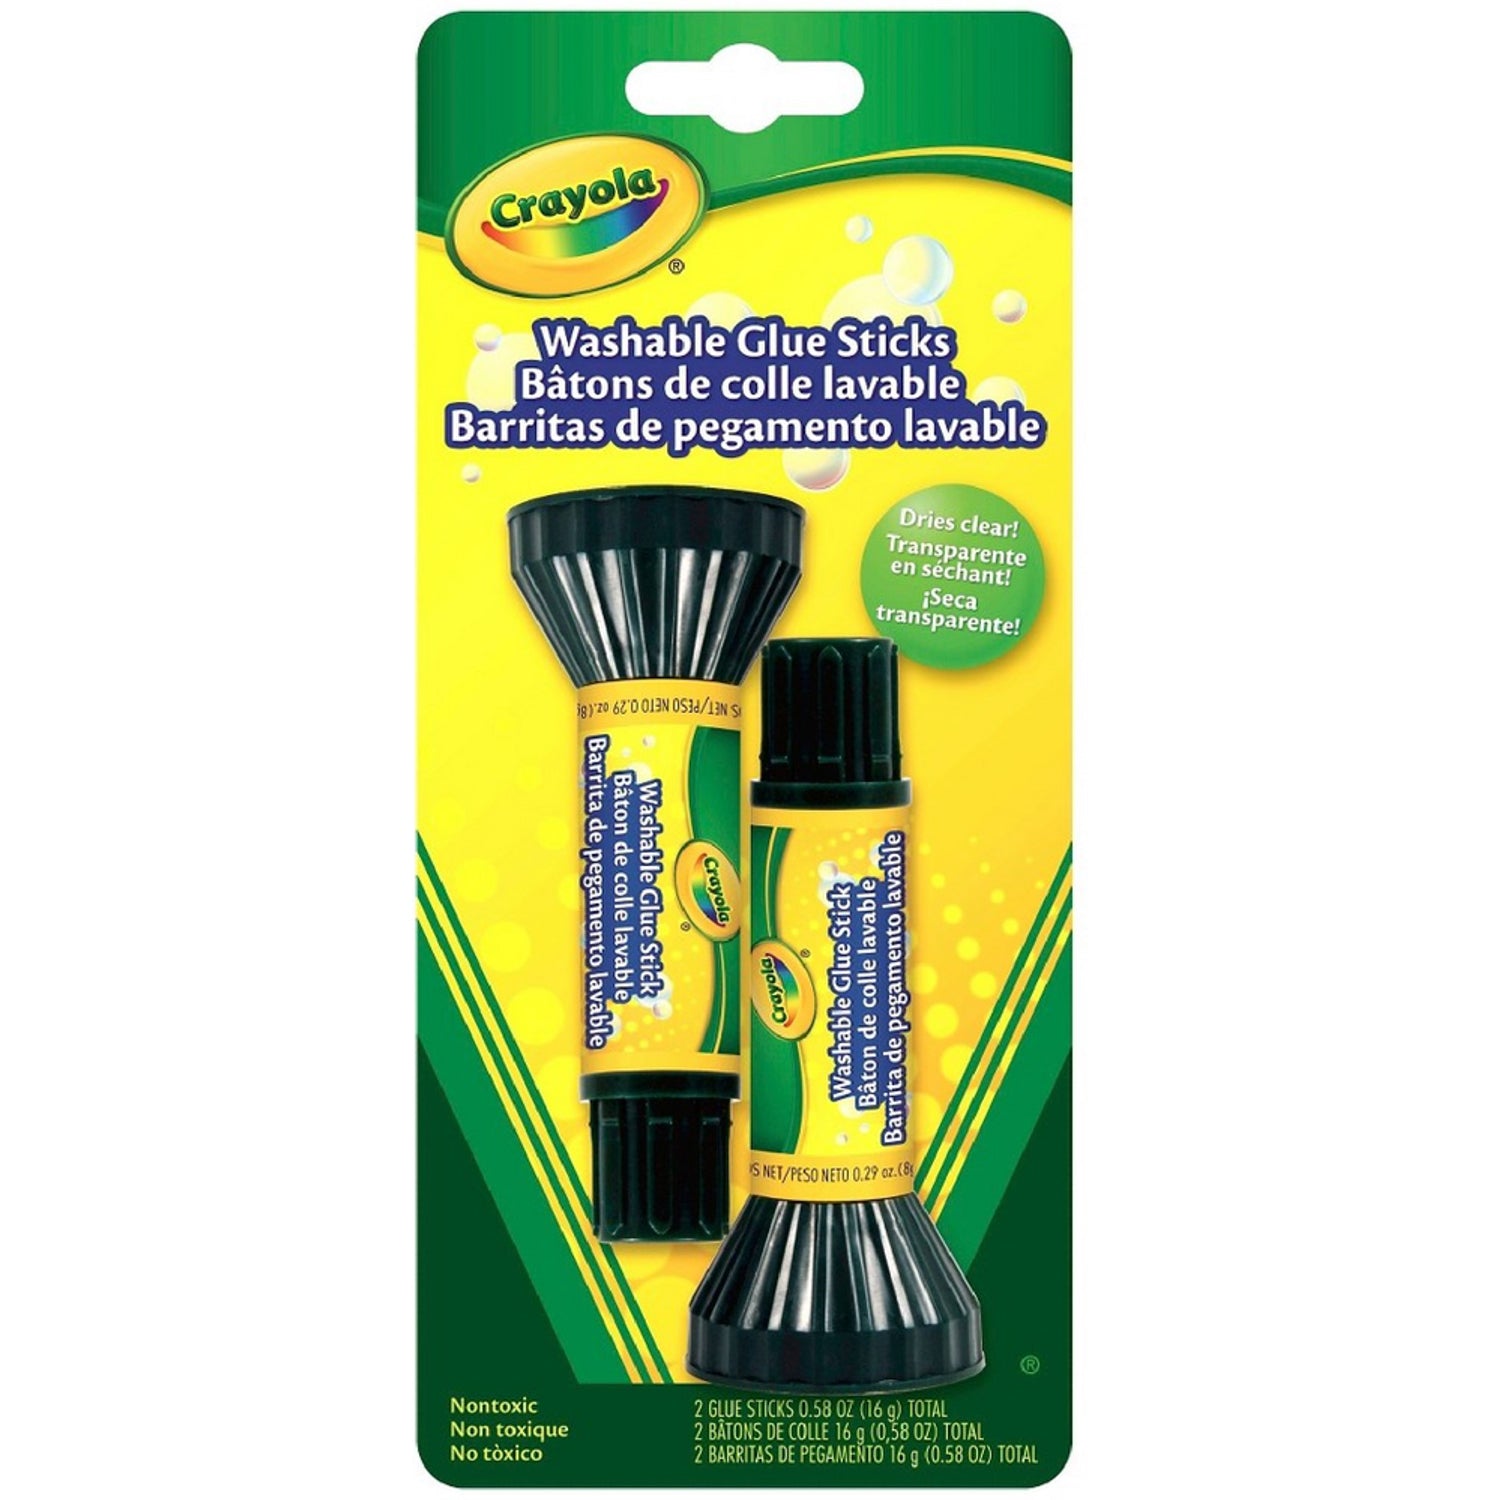 Mr. Pen- Disappearing Purple Glue Sticks, 8 Pack, Washable, Glue Sticks,  School Glue Sticks, Glue Sticks for Kids, Purple Glue Sticks, School Glue